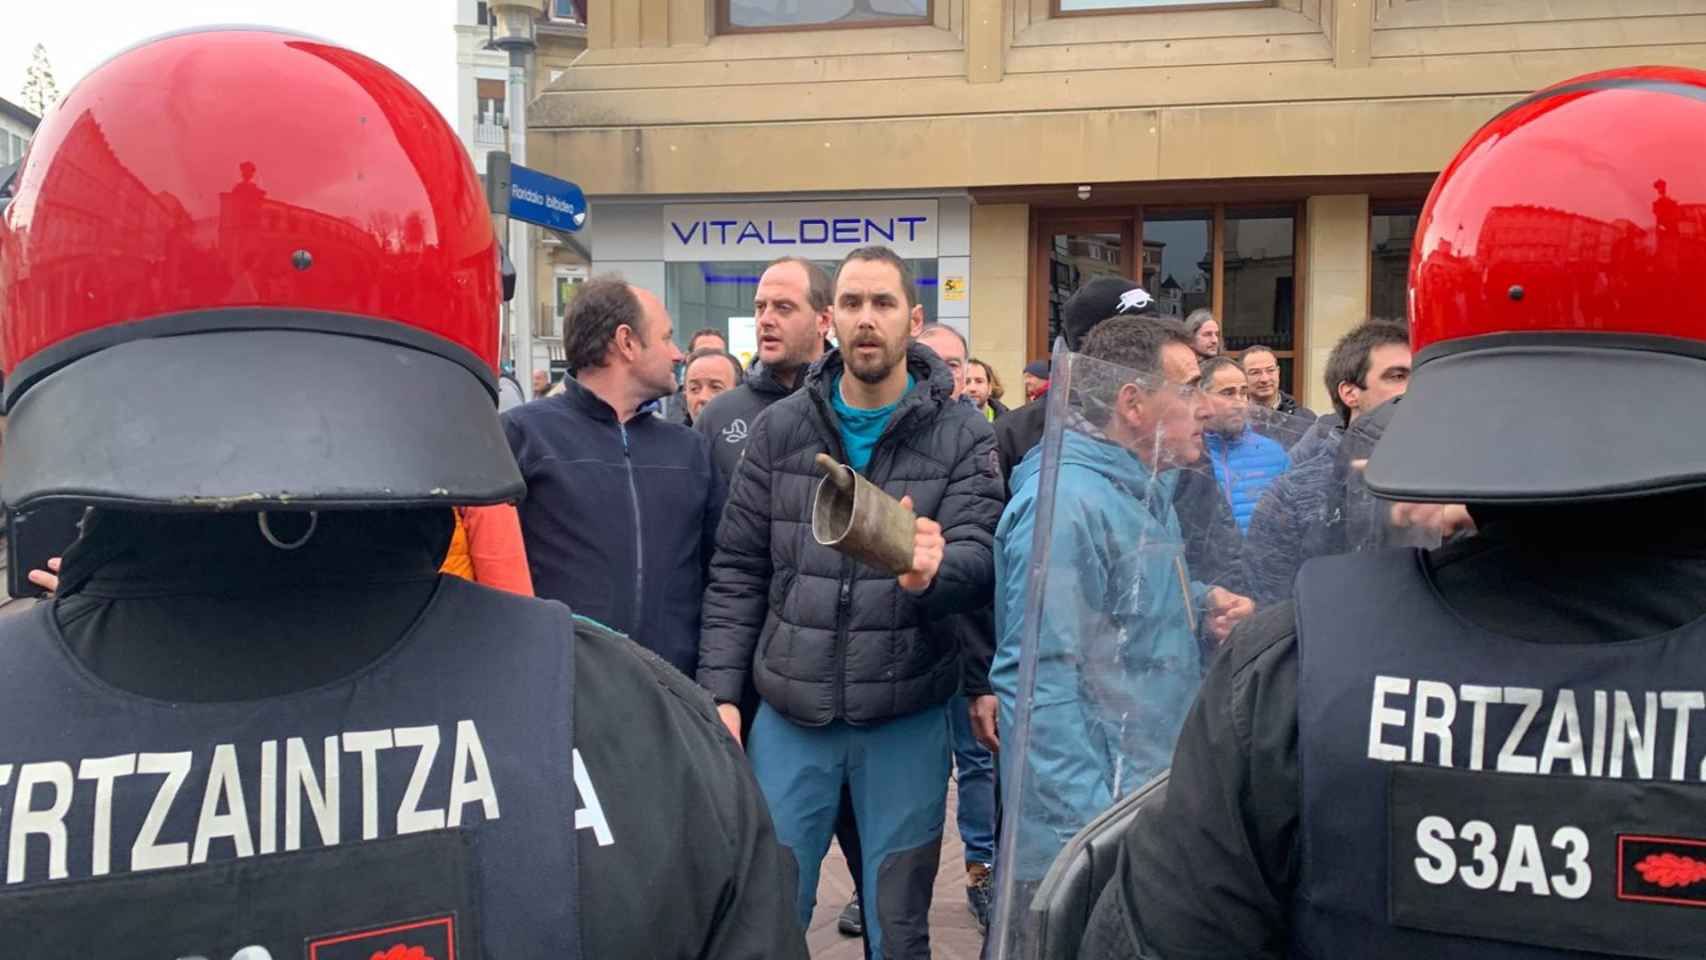 Cerca de 100 ganaderos se han manifestado frente al Parlamento vasco / Europa Press